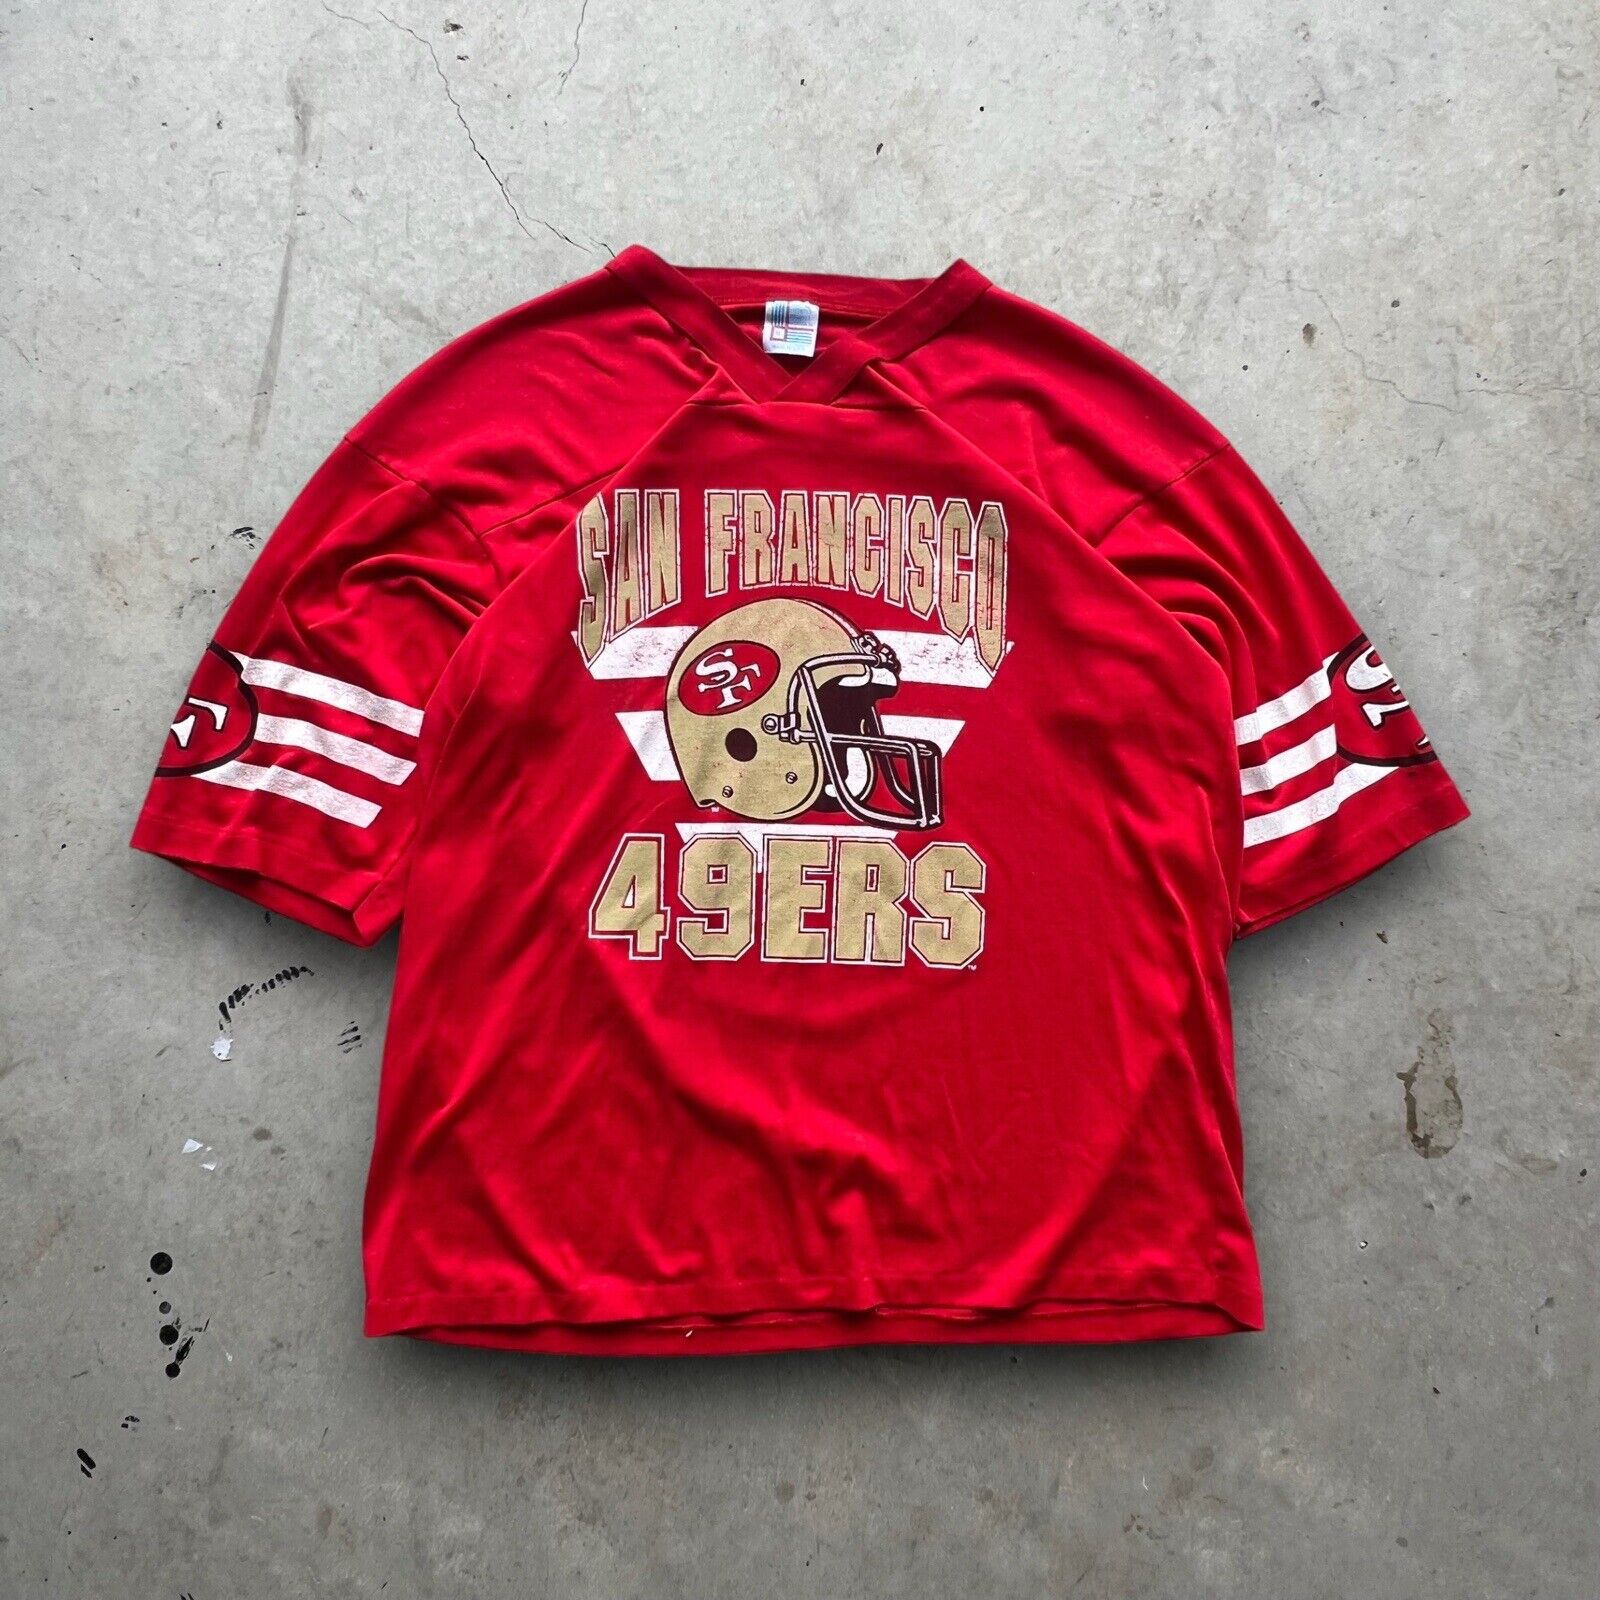 Vintage 1980s San Francisco jersey shirt